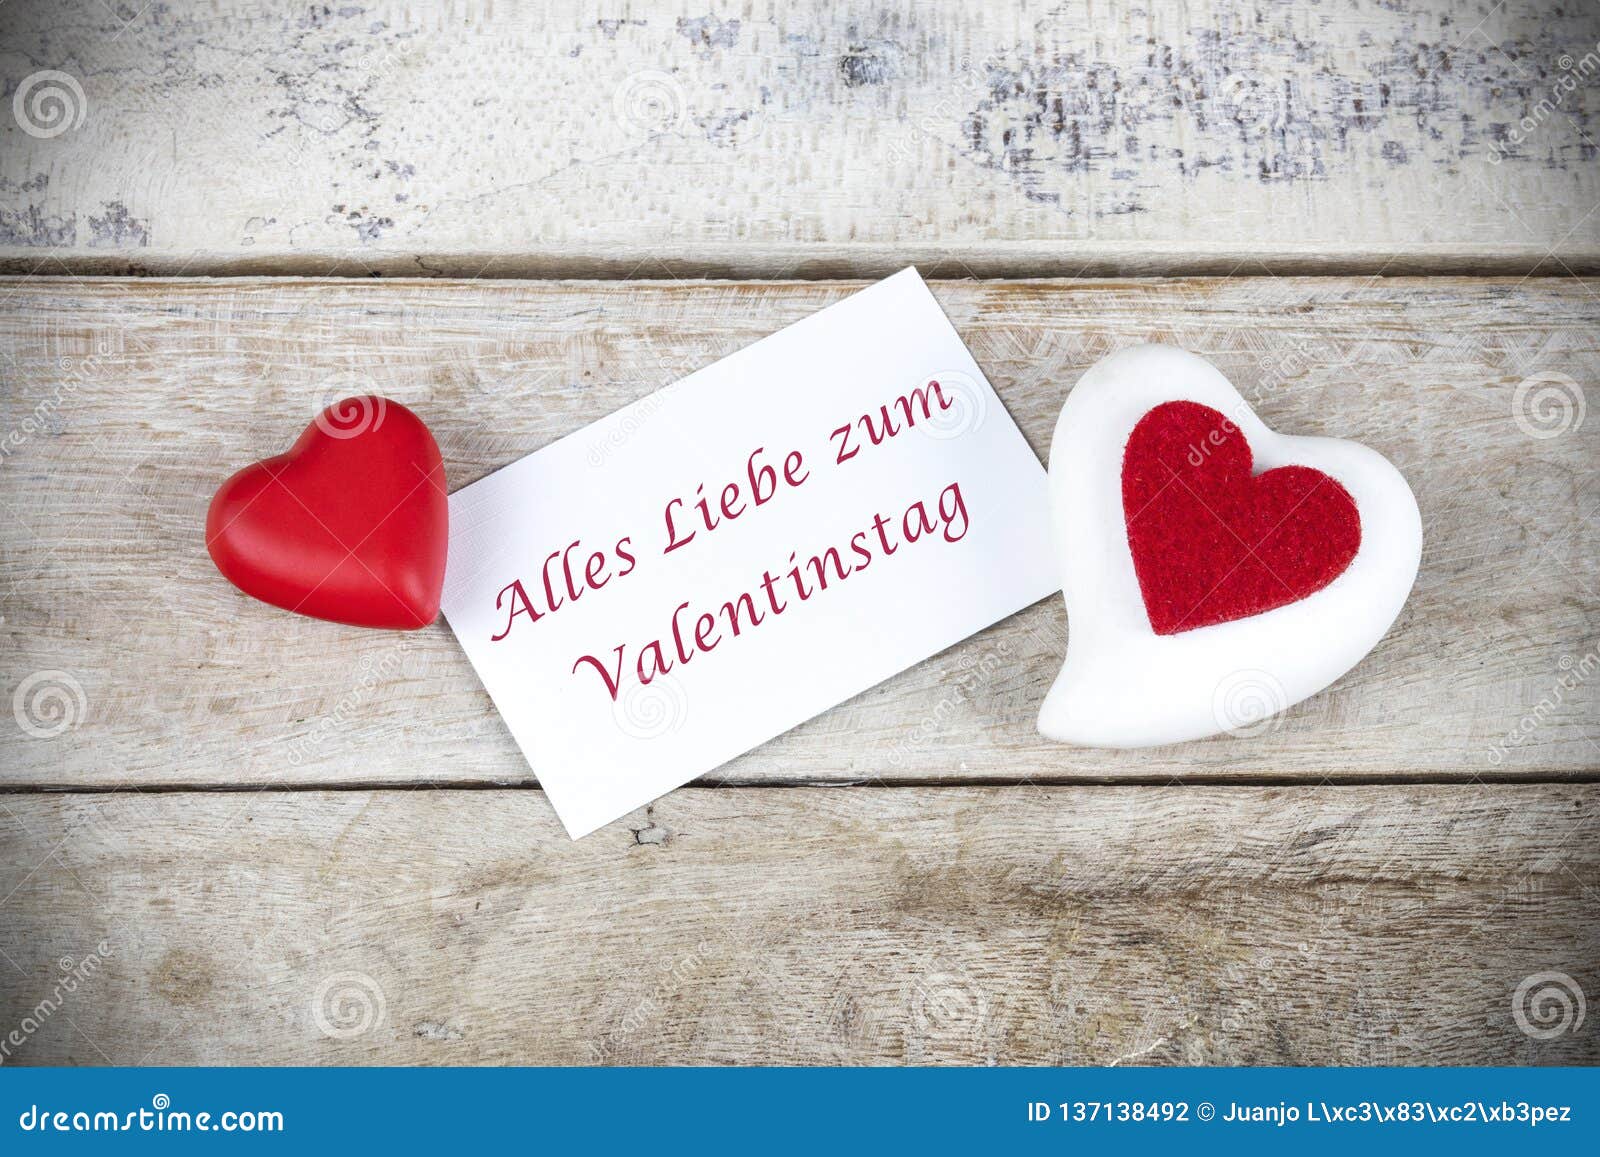 Valentine Greeting Card On Wooden Table With Text Alles Liebe Zum Valentinstag Written In German Which Means Happy Valentine Da Stock Photo Image Of Design Love